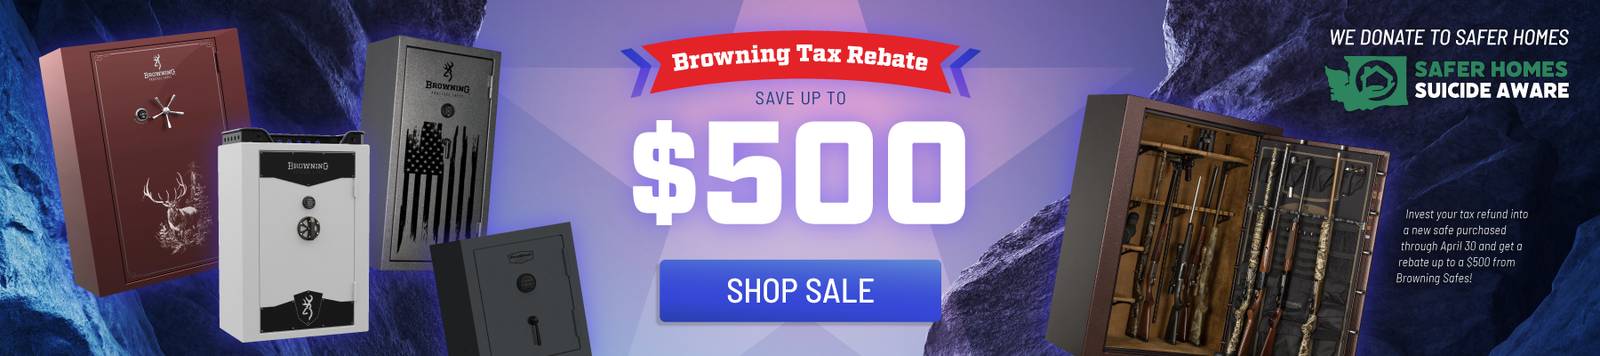 Browning Tax Rebate - Save up to $500